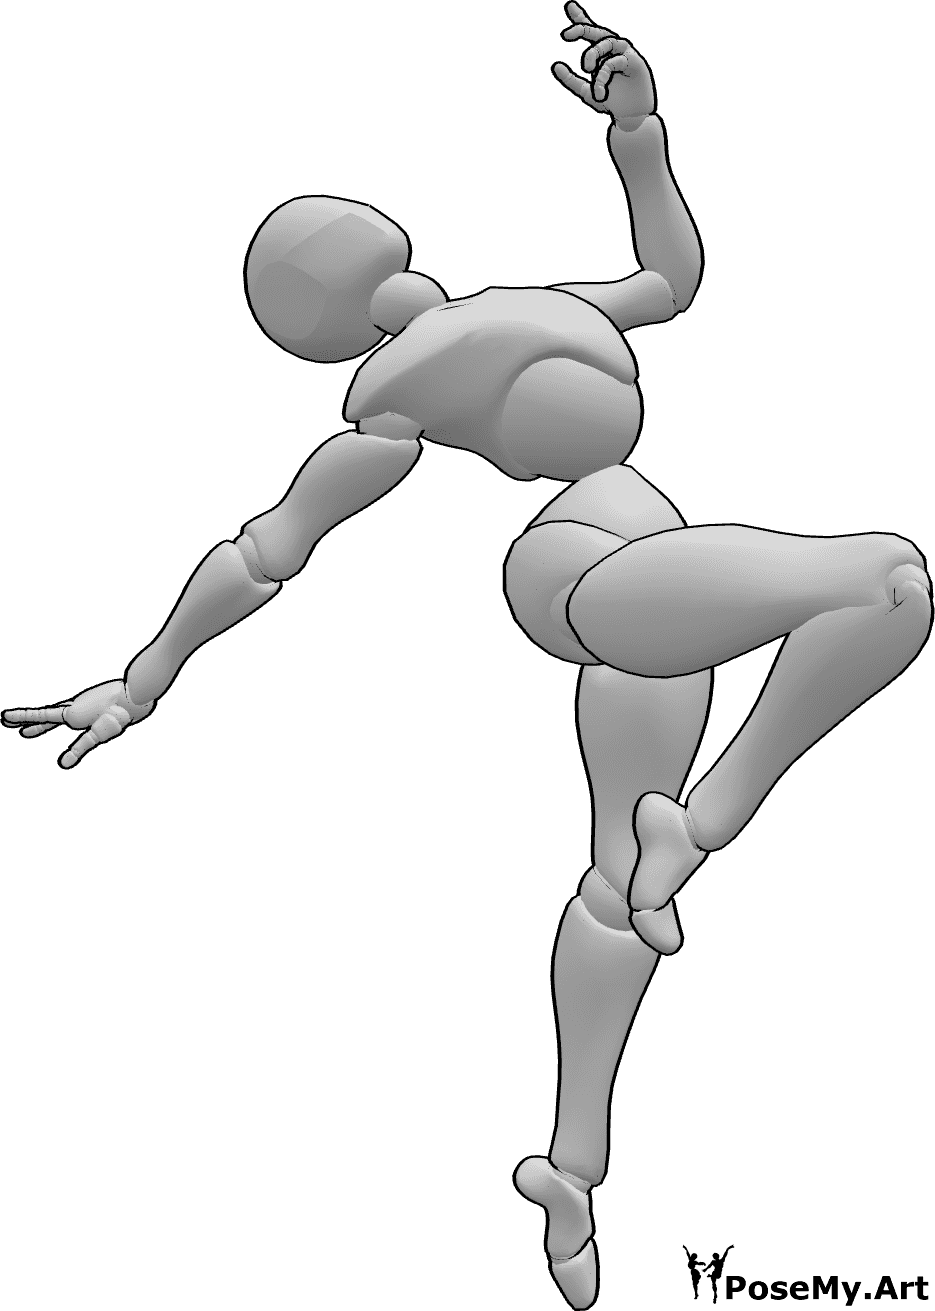 Referencia de poses- Estética pose de salto acrobático - Estética pose acrobática de salto en el aire